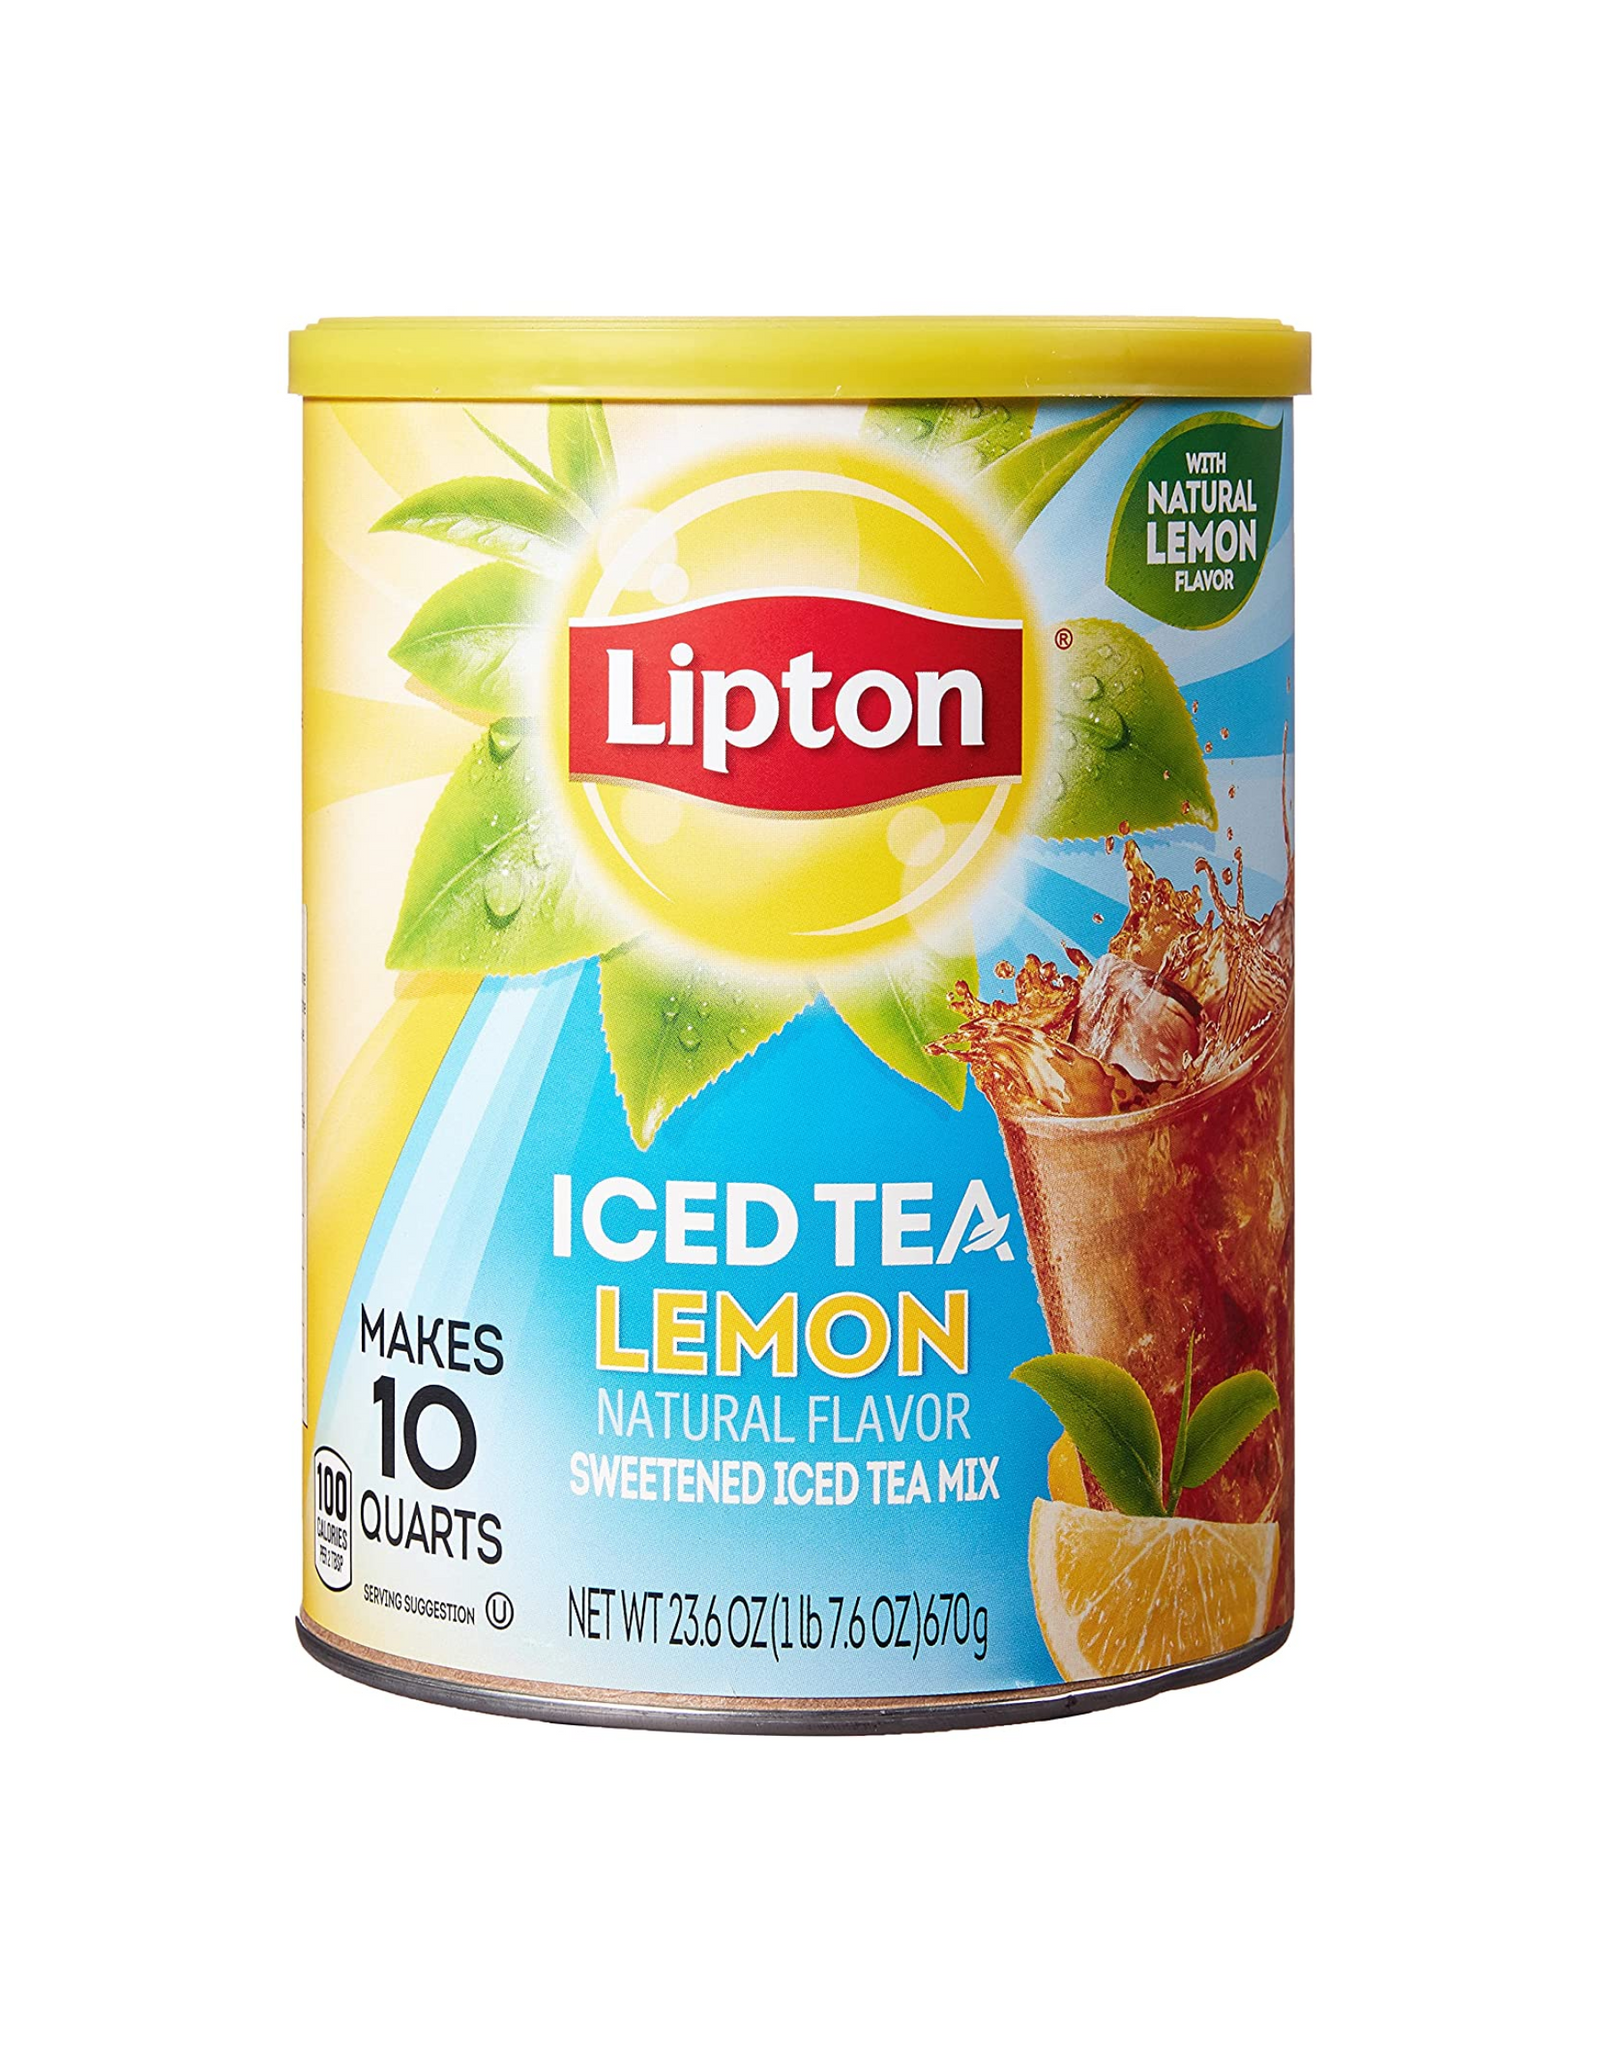 Lipton Iced Tea Mix, Lemon, Sweetend Iced Tea Mix, Makes 10 Quarts (Pack of 6)